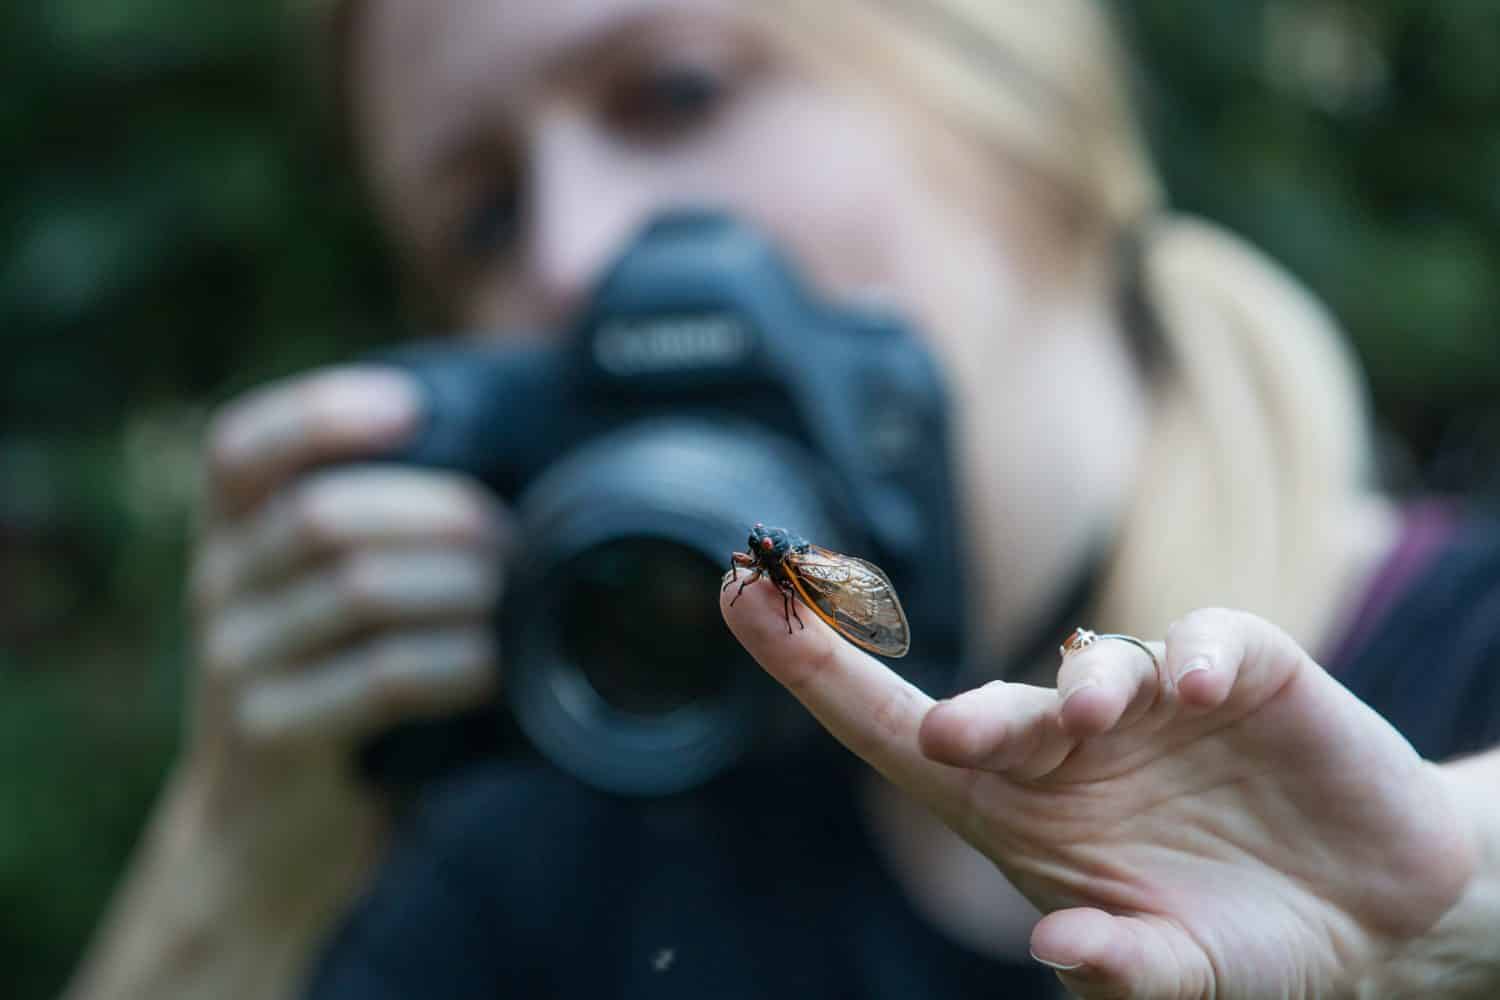 A woman photographs a periodical Brood X cicada with a digital camera. 